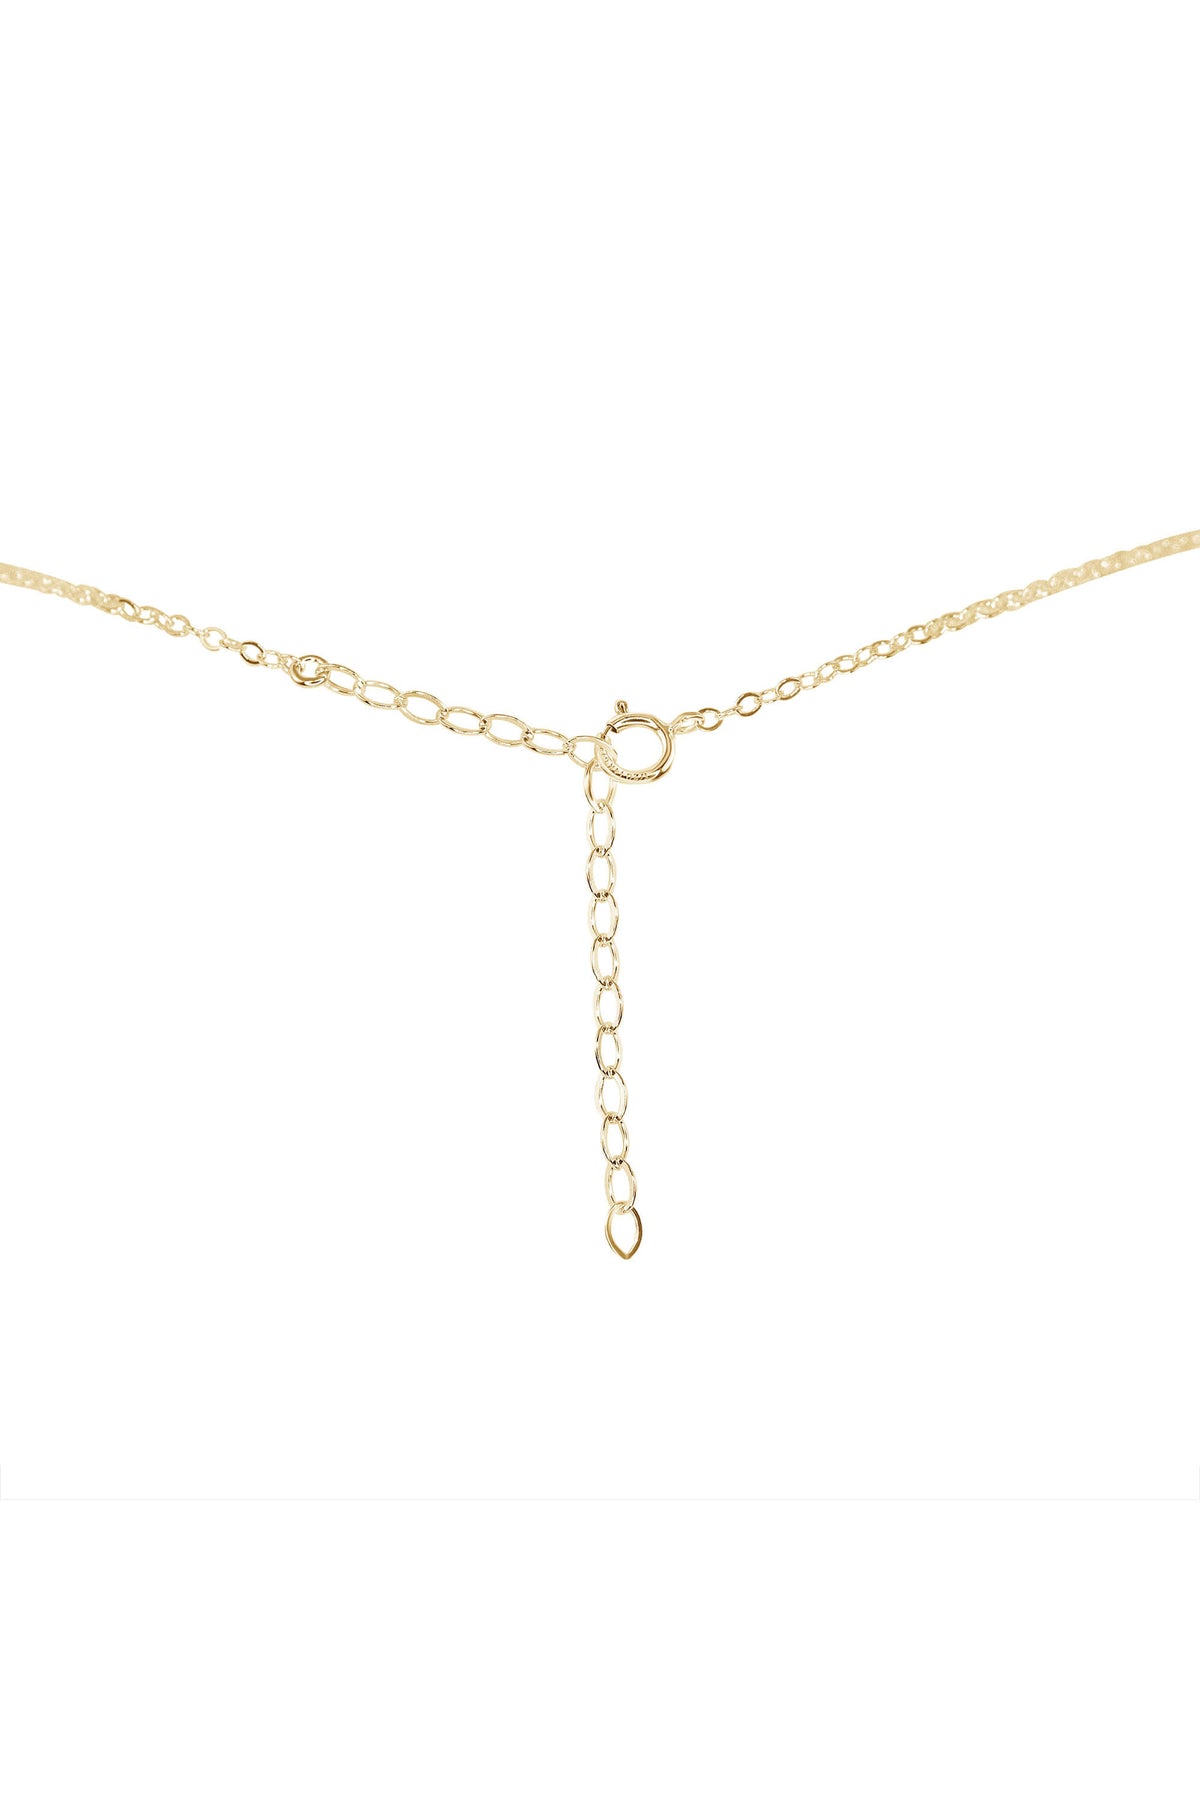 Raw Nugget Choker - Apatite - 14K Gold Fill - Luna Tide Handmade Jewellery